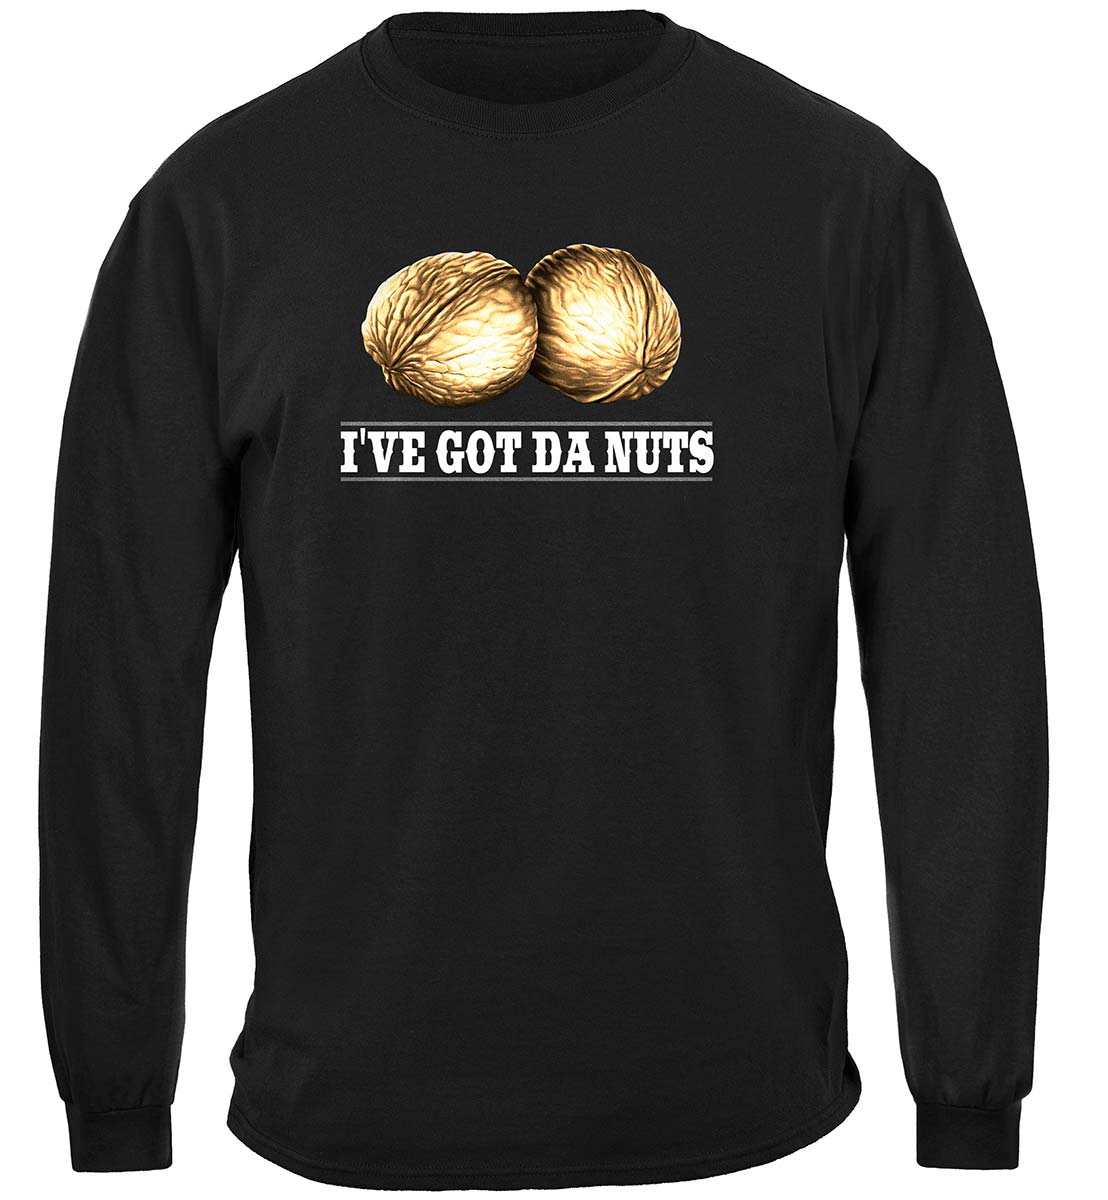 The Nutz Premium T-Shirt